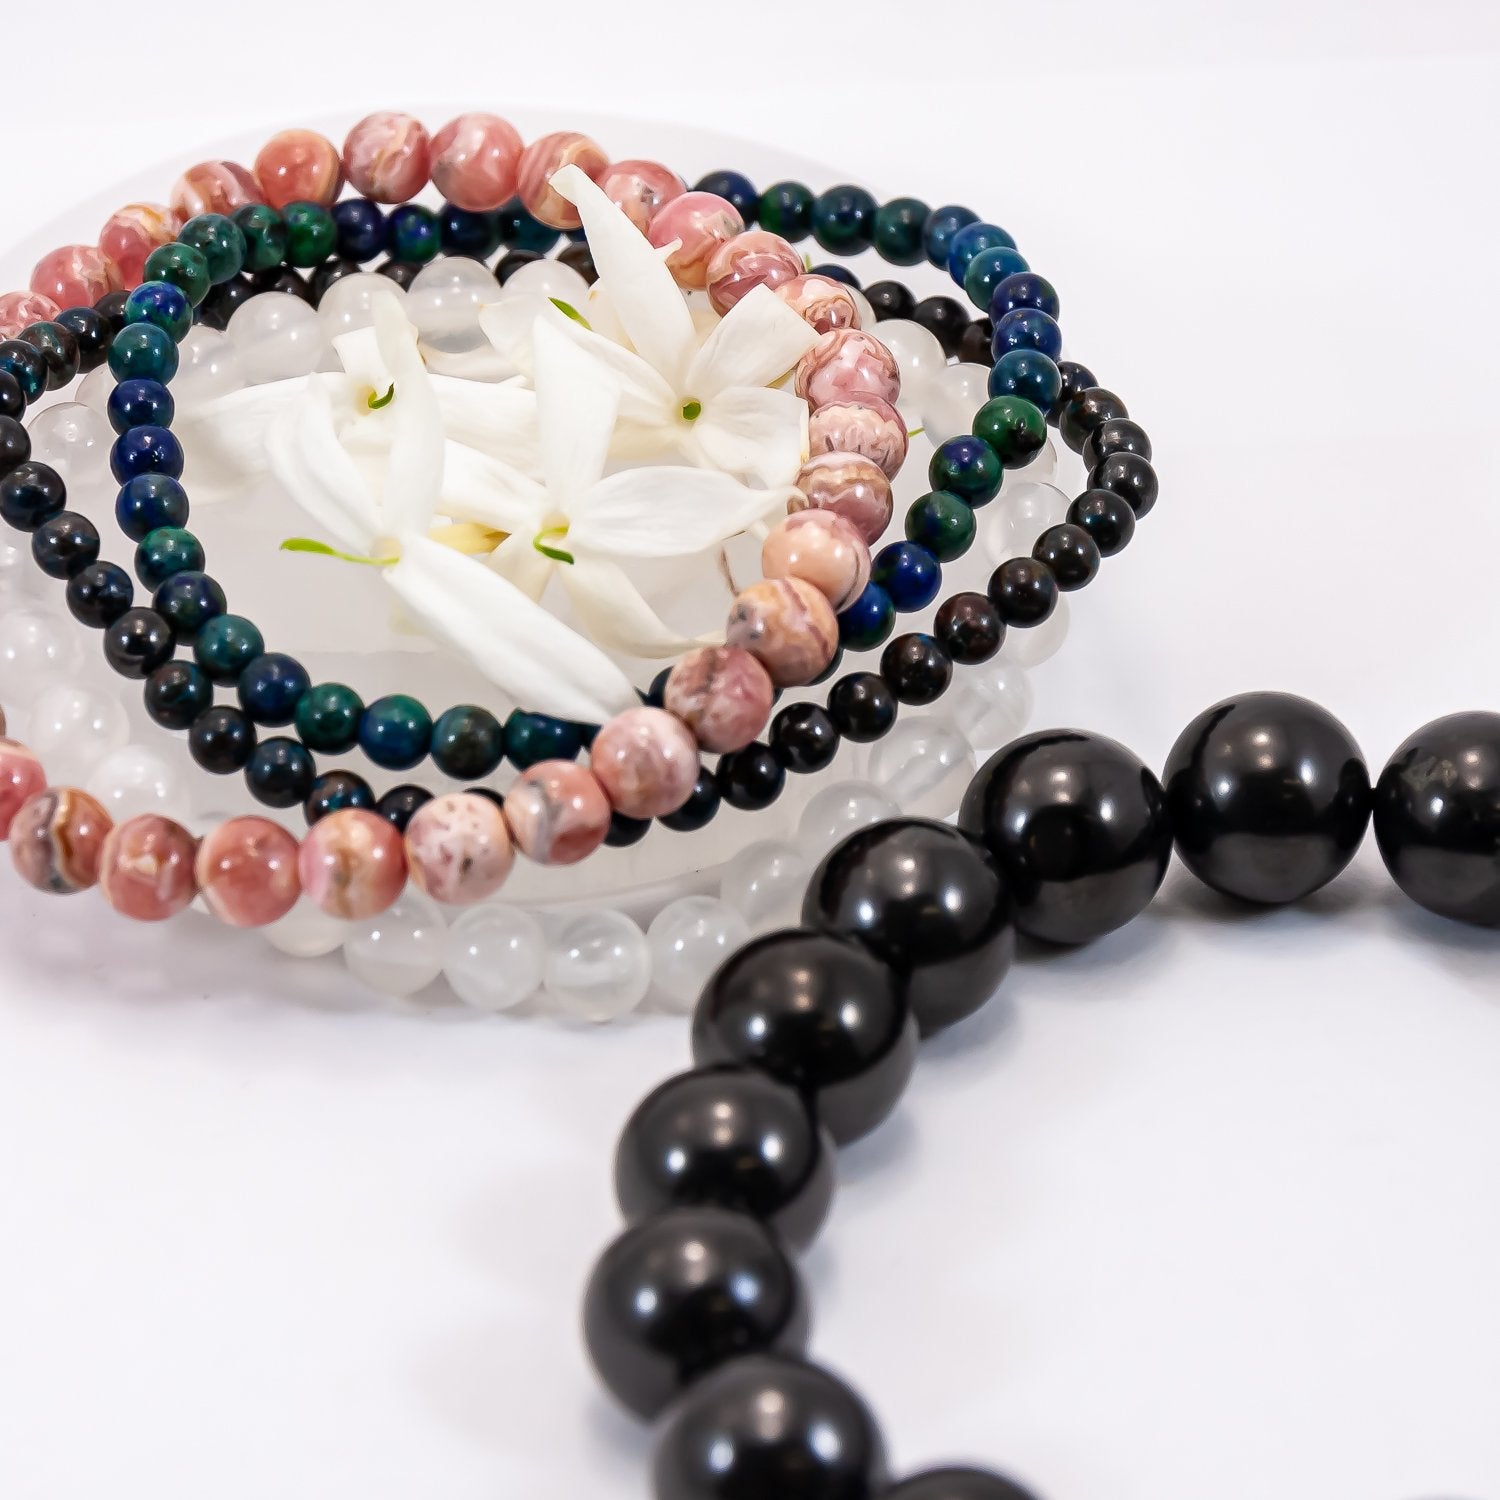 Shungite purification bracelet. Selenite, chrysocolla, azurite, and rhodochrosite beaded bracelets around white flowers.